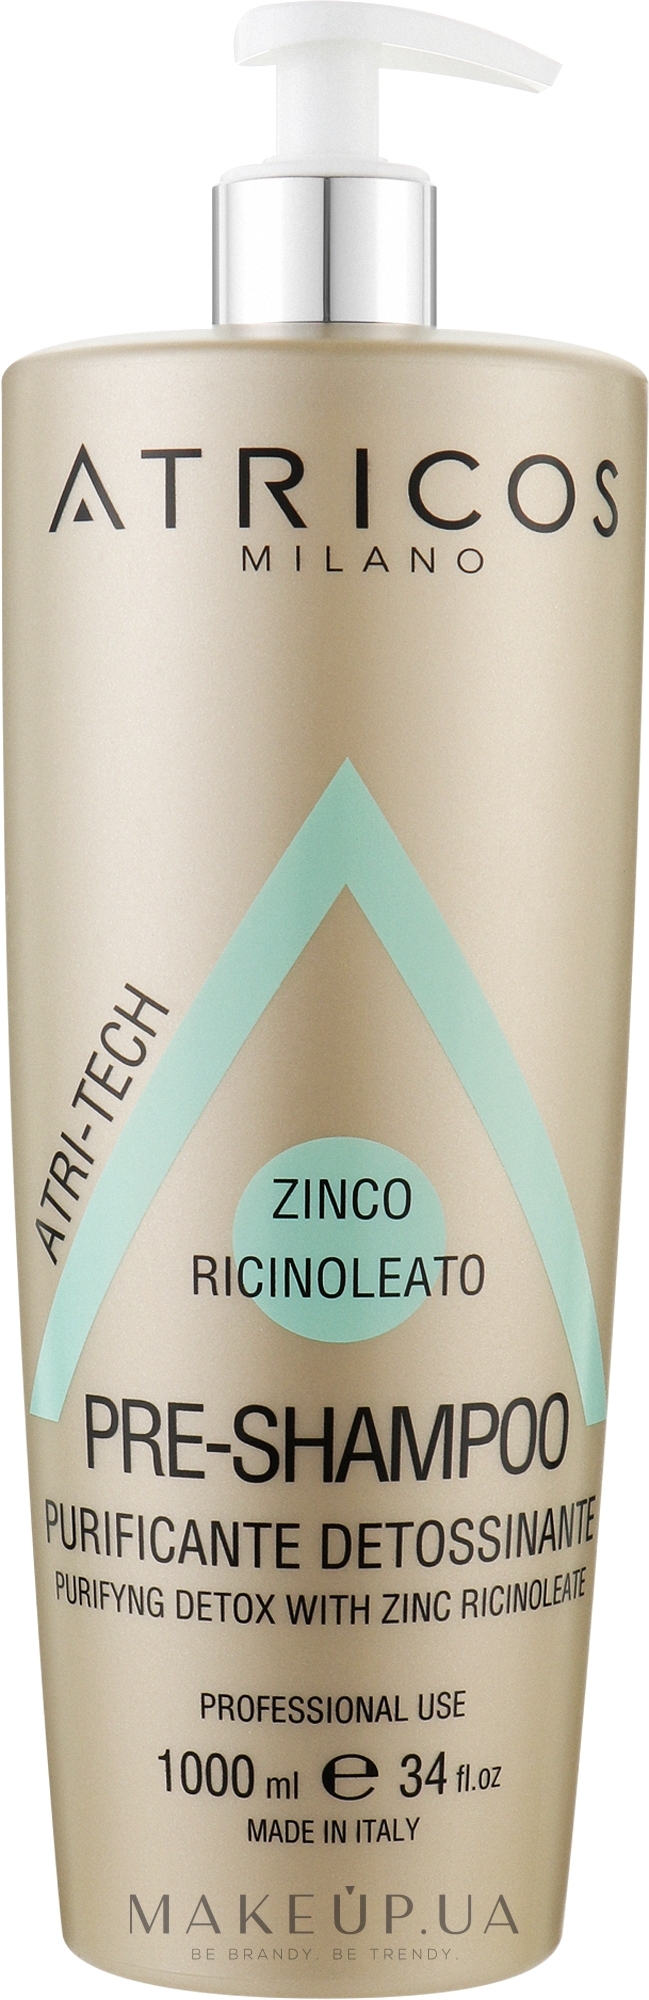 Очищающий детокс-шампунь для волос - Atricos Pre Shampoo Purifying Detoxifying — фото 1000ml